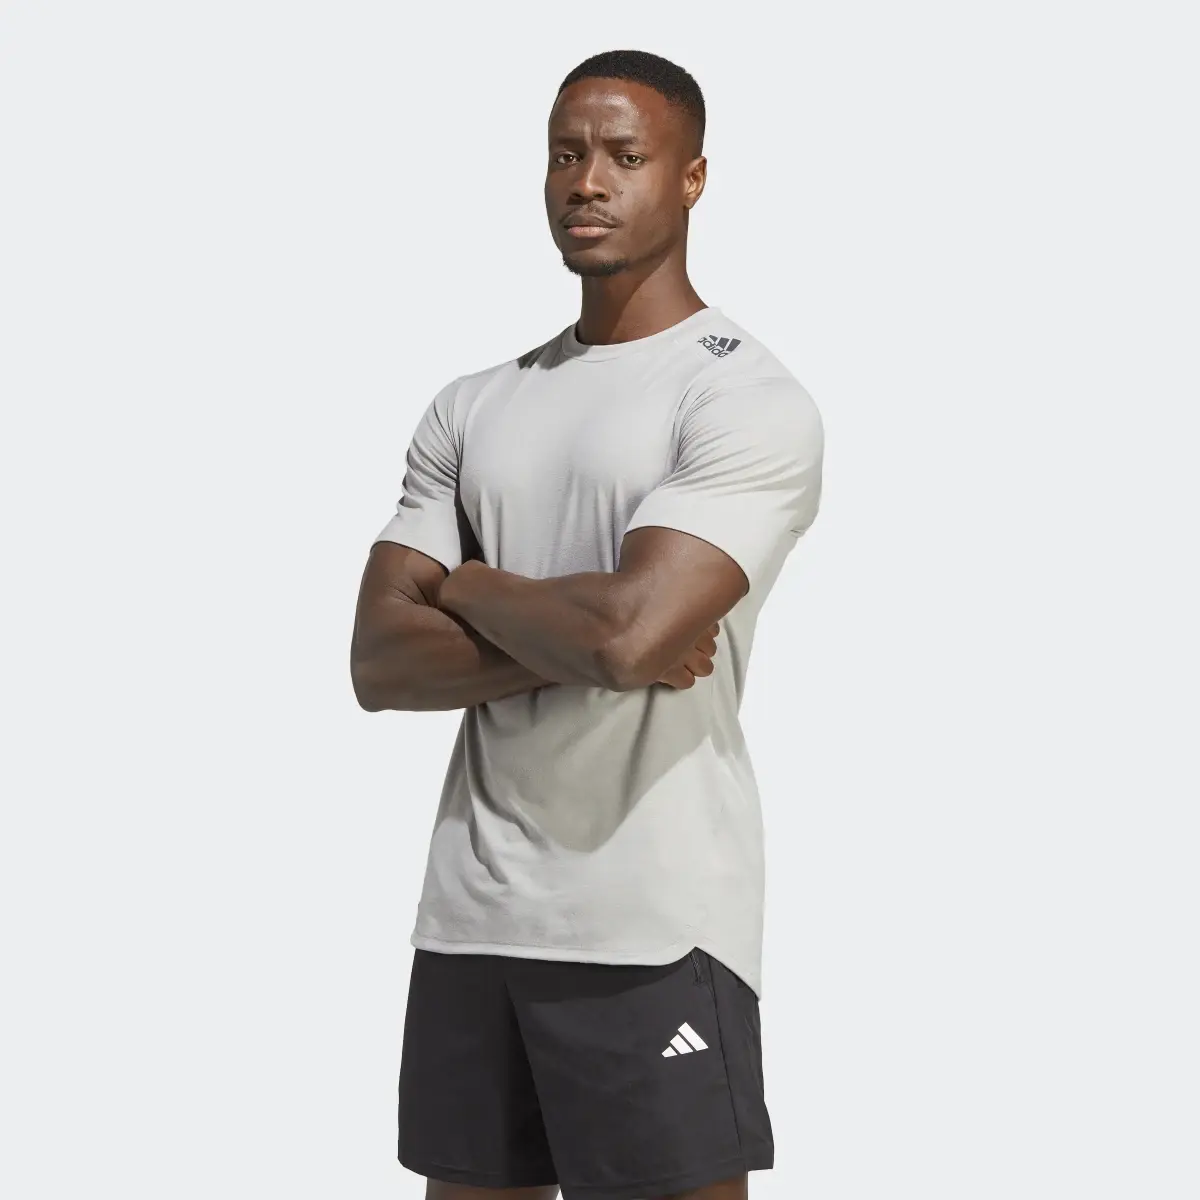 Adidas T-shirt Designed for Training. 2